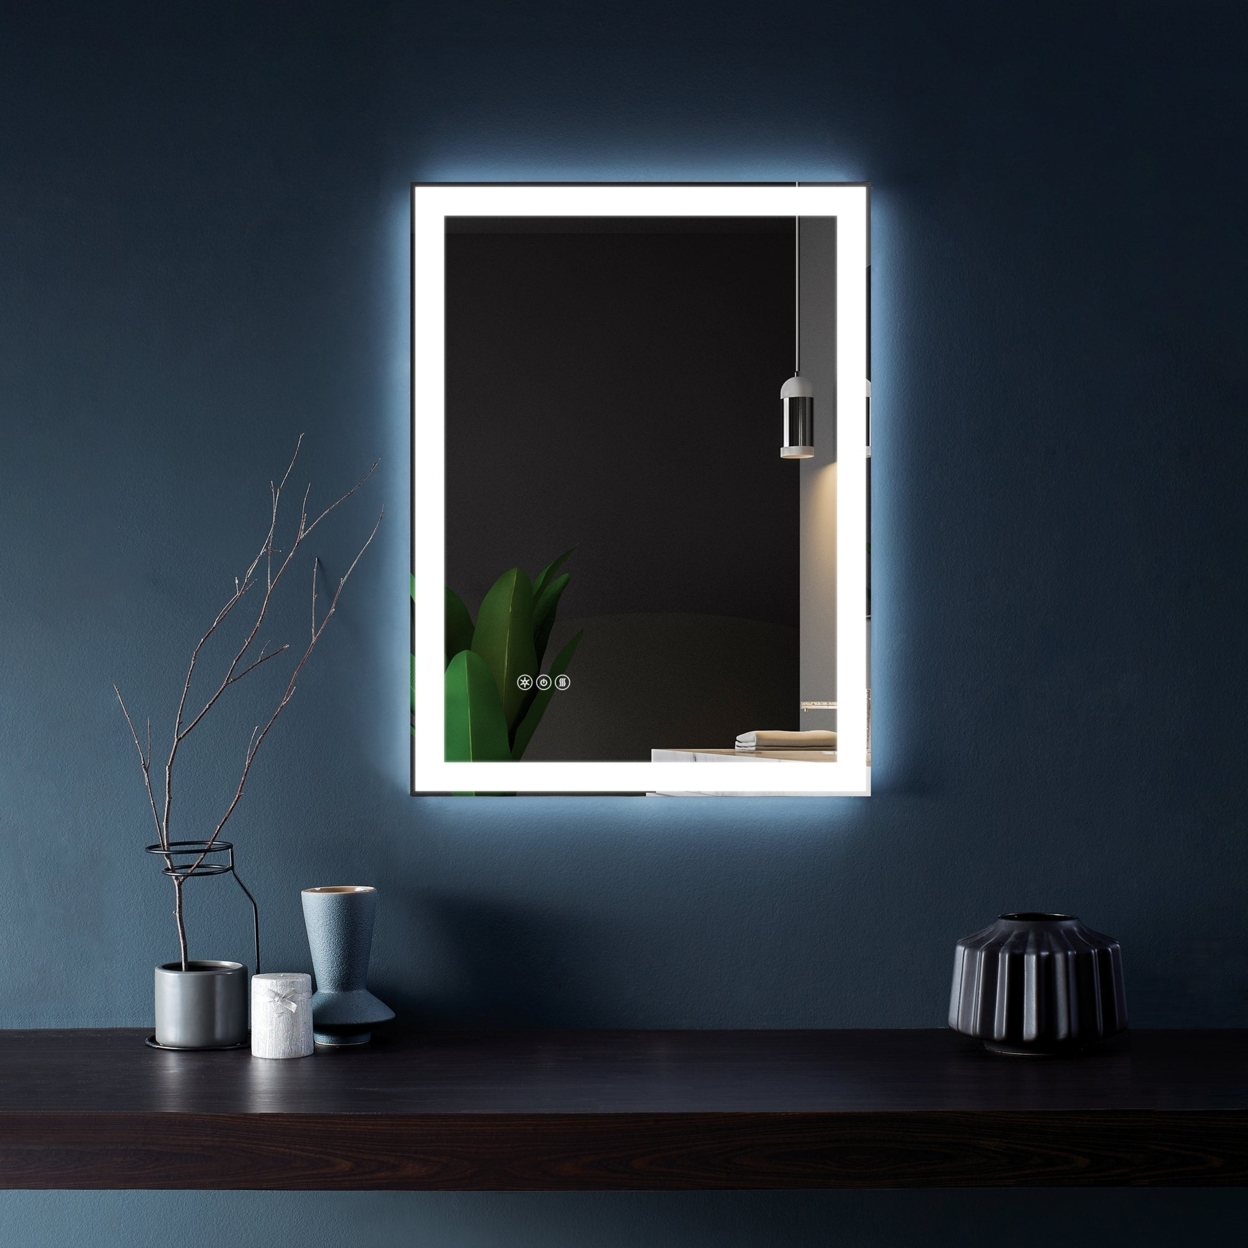 ExBrite 24 x 32 inch Bathroom LED Light Mirrors Anti- fog Mirrors